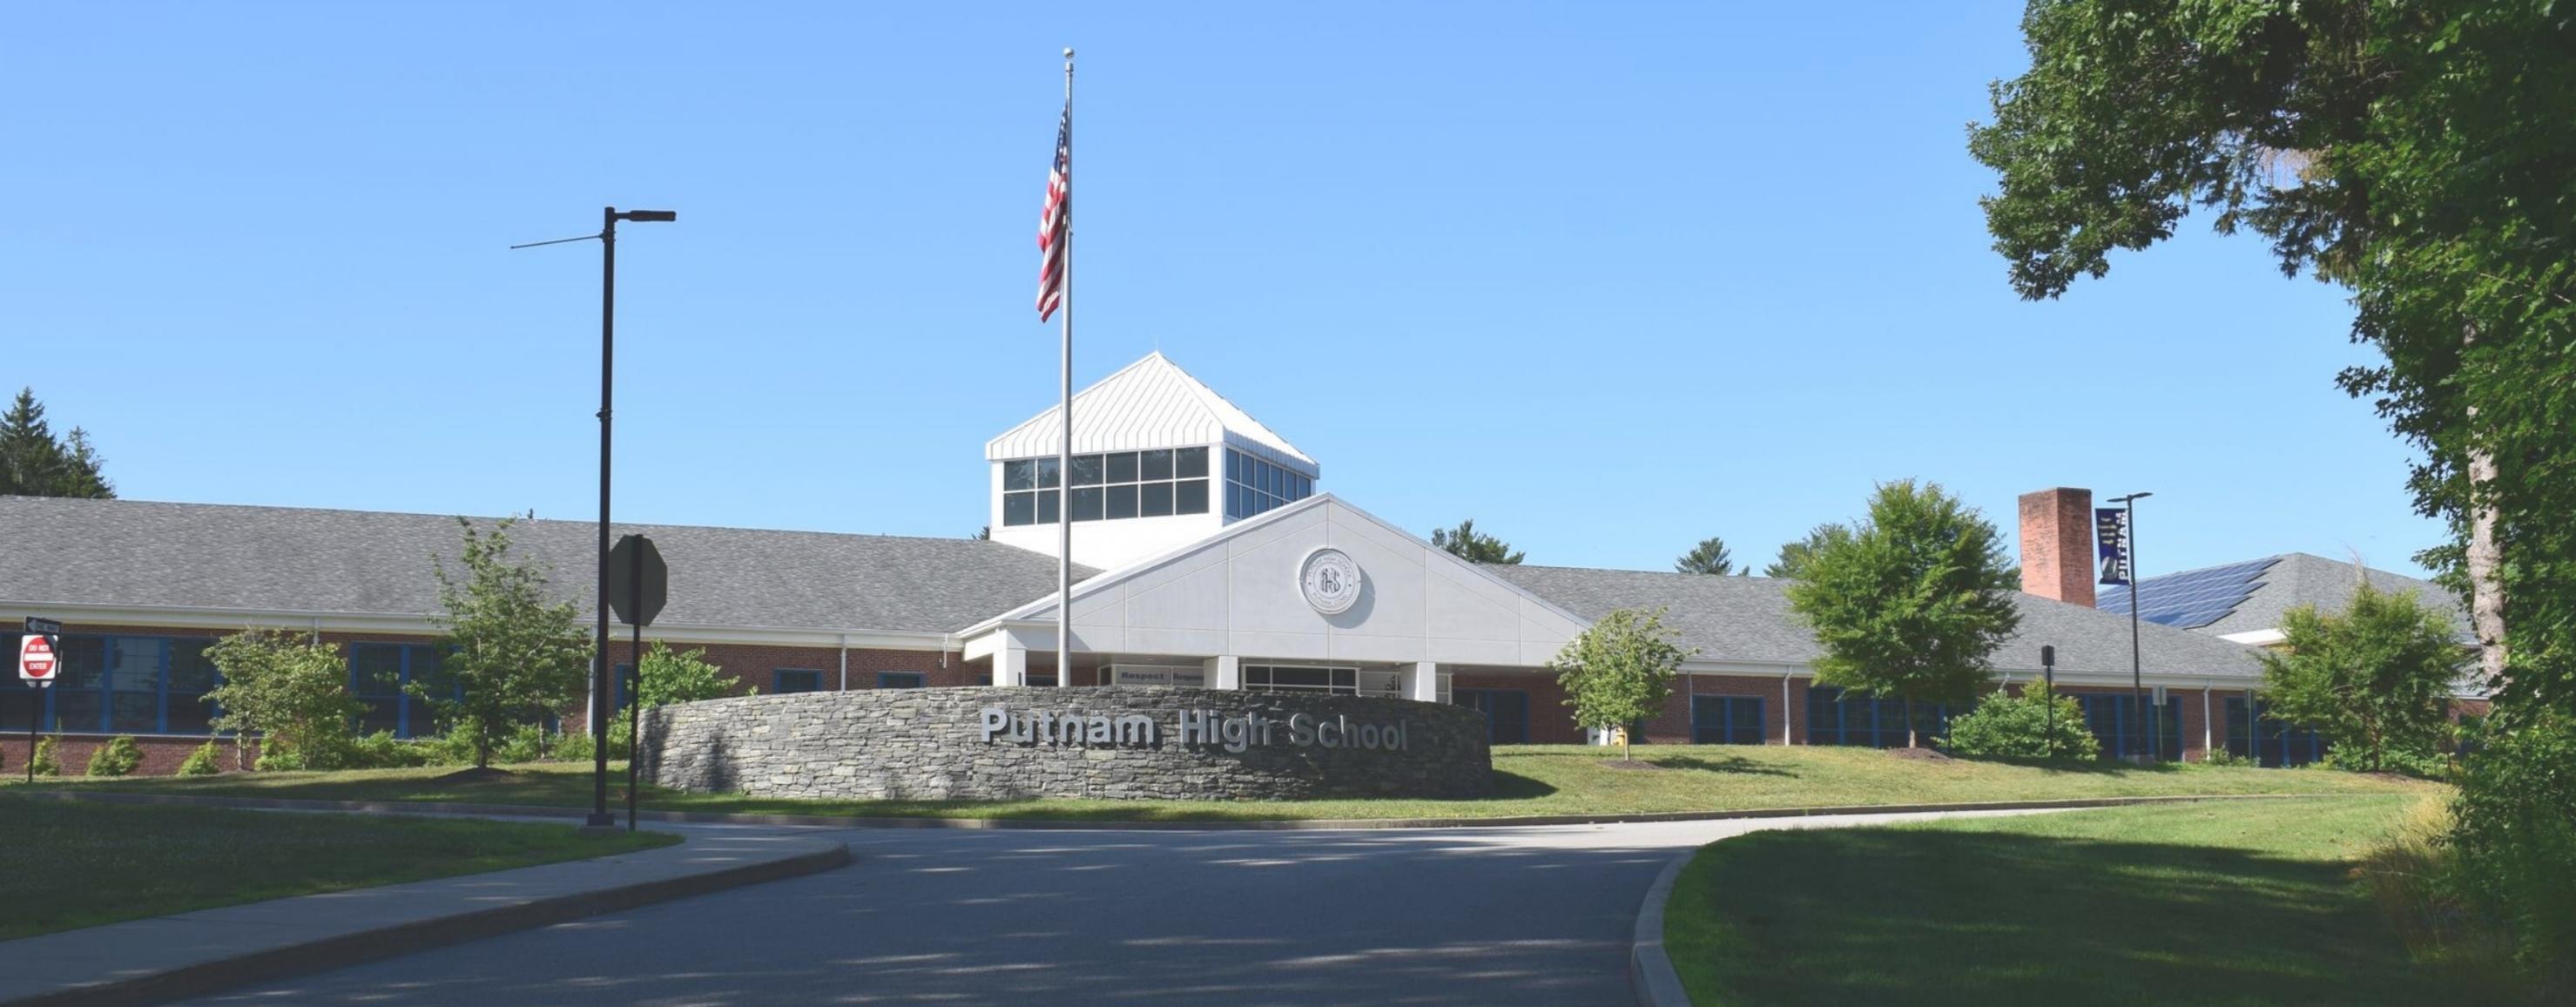 Putnam High School | Putnam School District